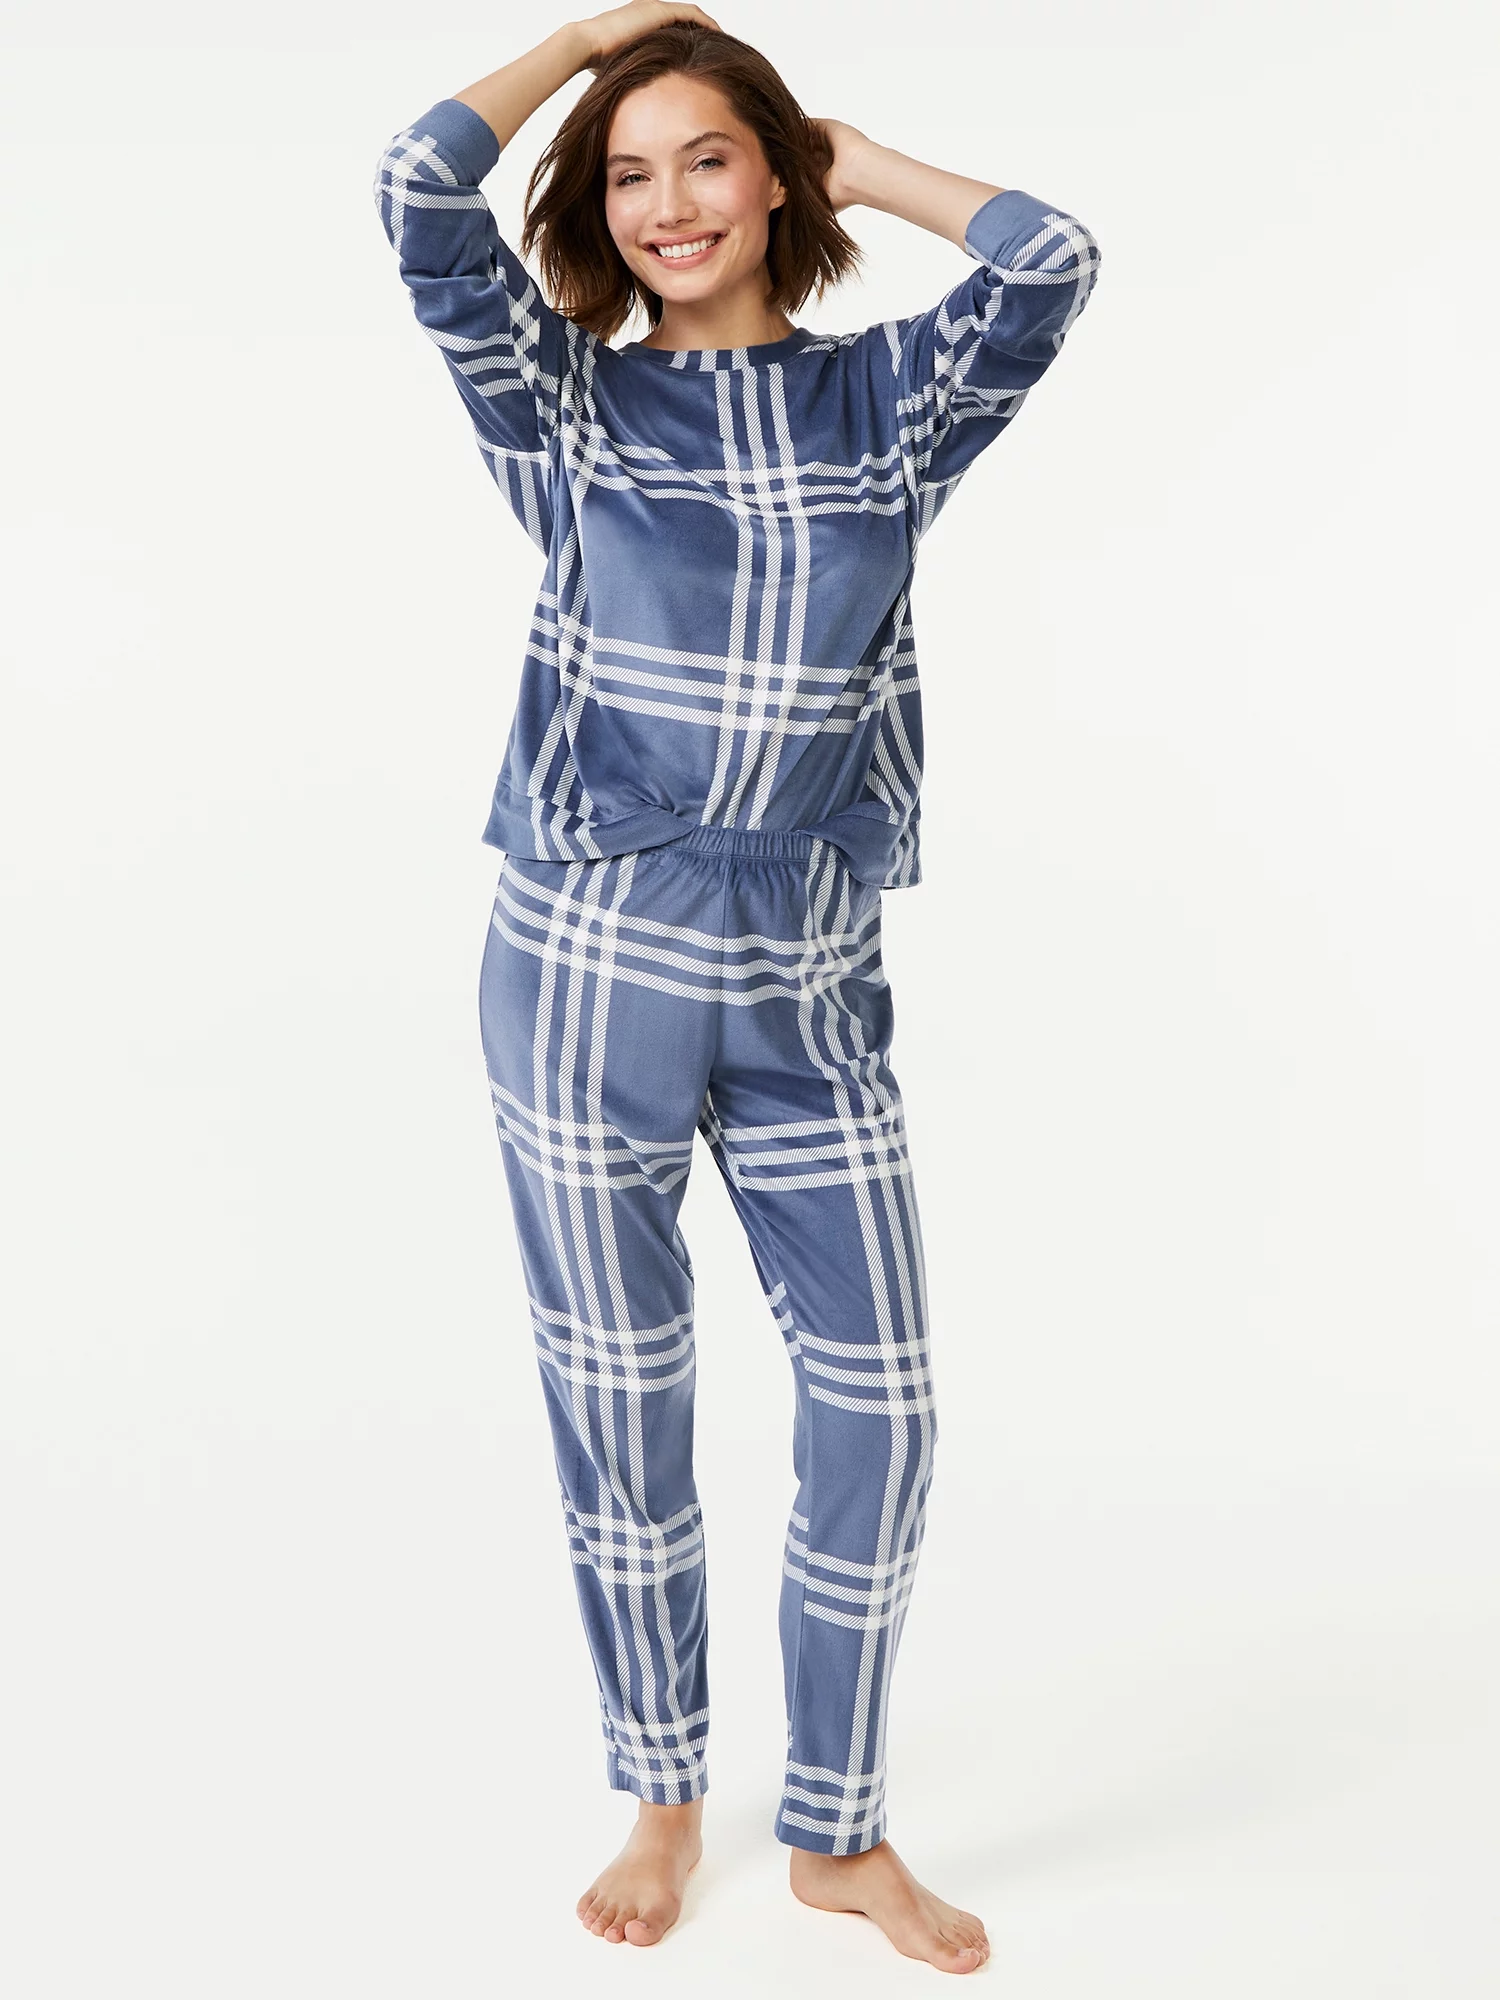 Joyspun Women's Velour Top and Sleep Pants Pajama Set, 2-Piece, Sizes S to 3X